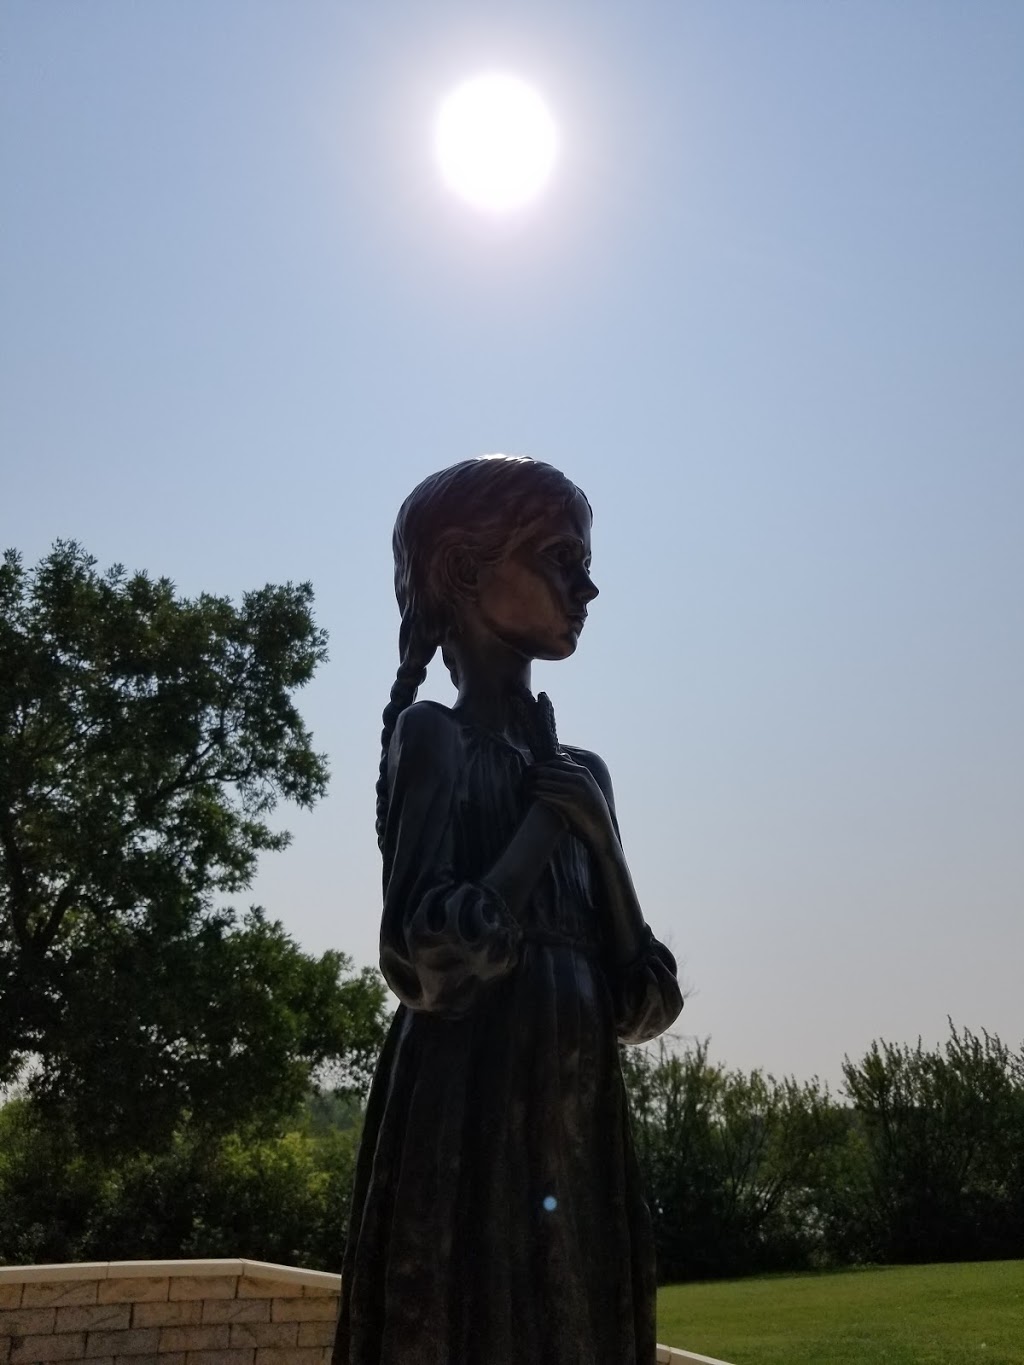 Holodomor Statue | Regina, SK S4S, Canada